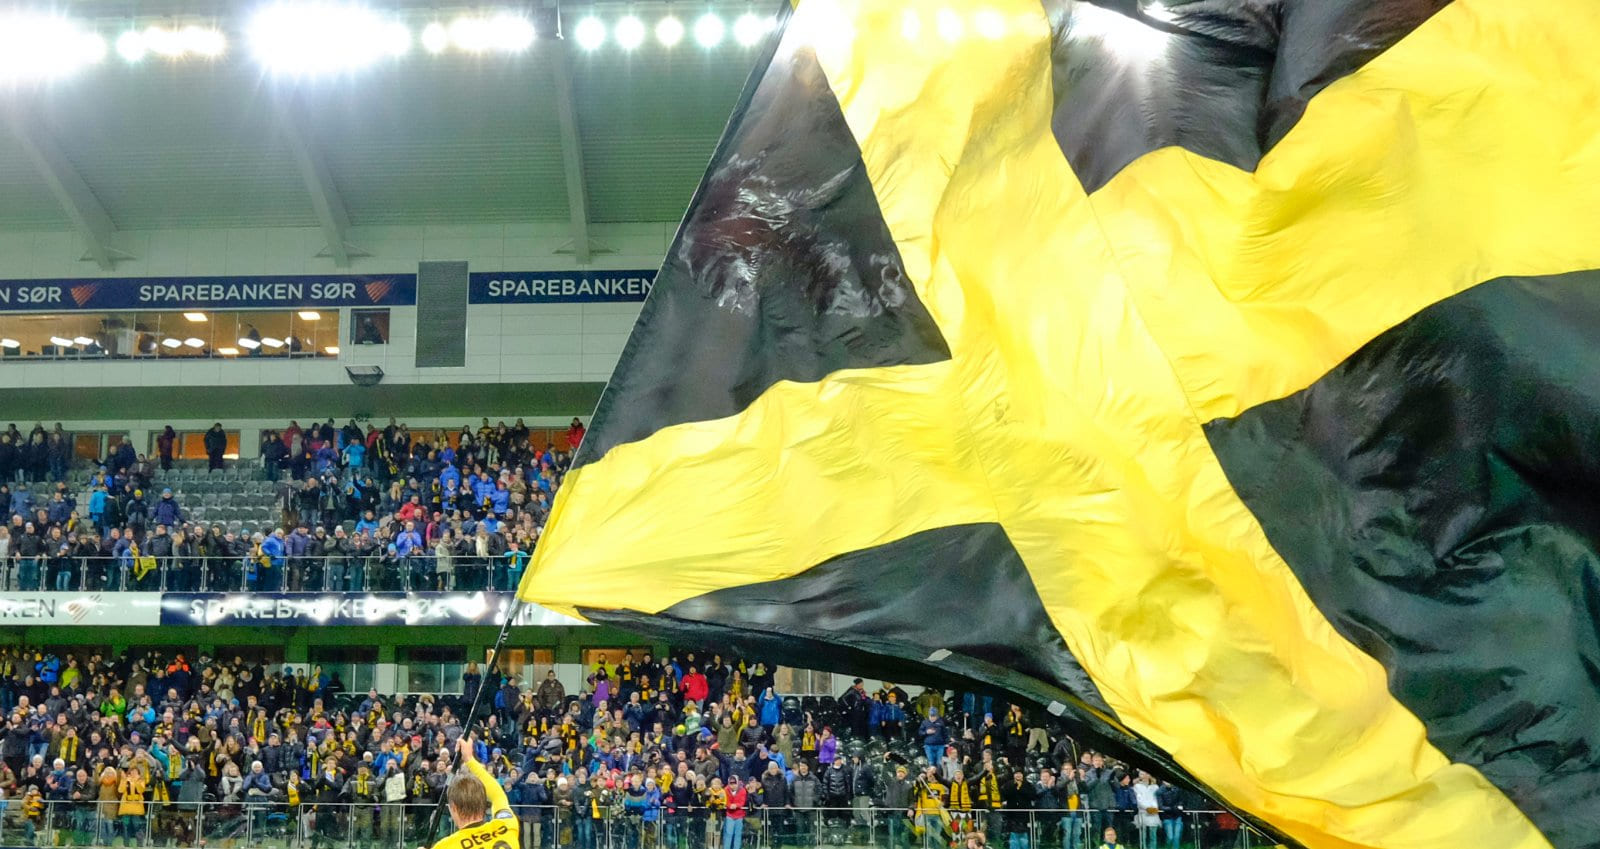 Start-flagget vaier på IK Start sin stadion med fullsatt tribune